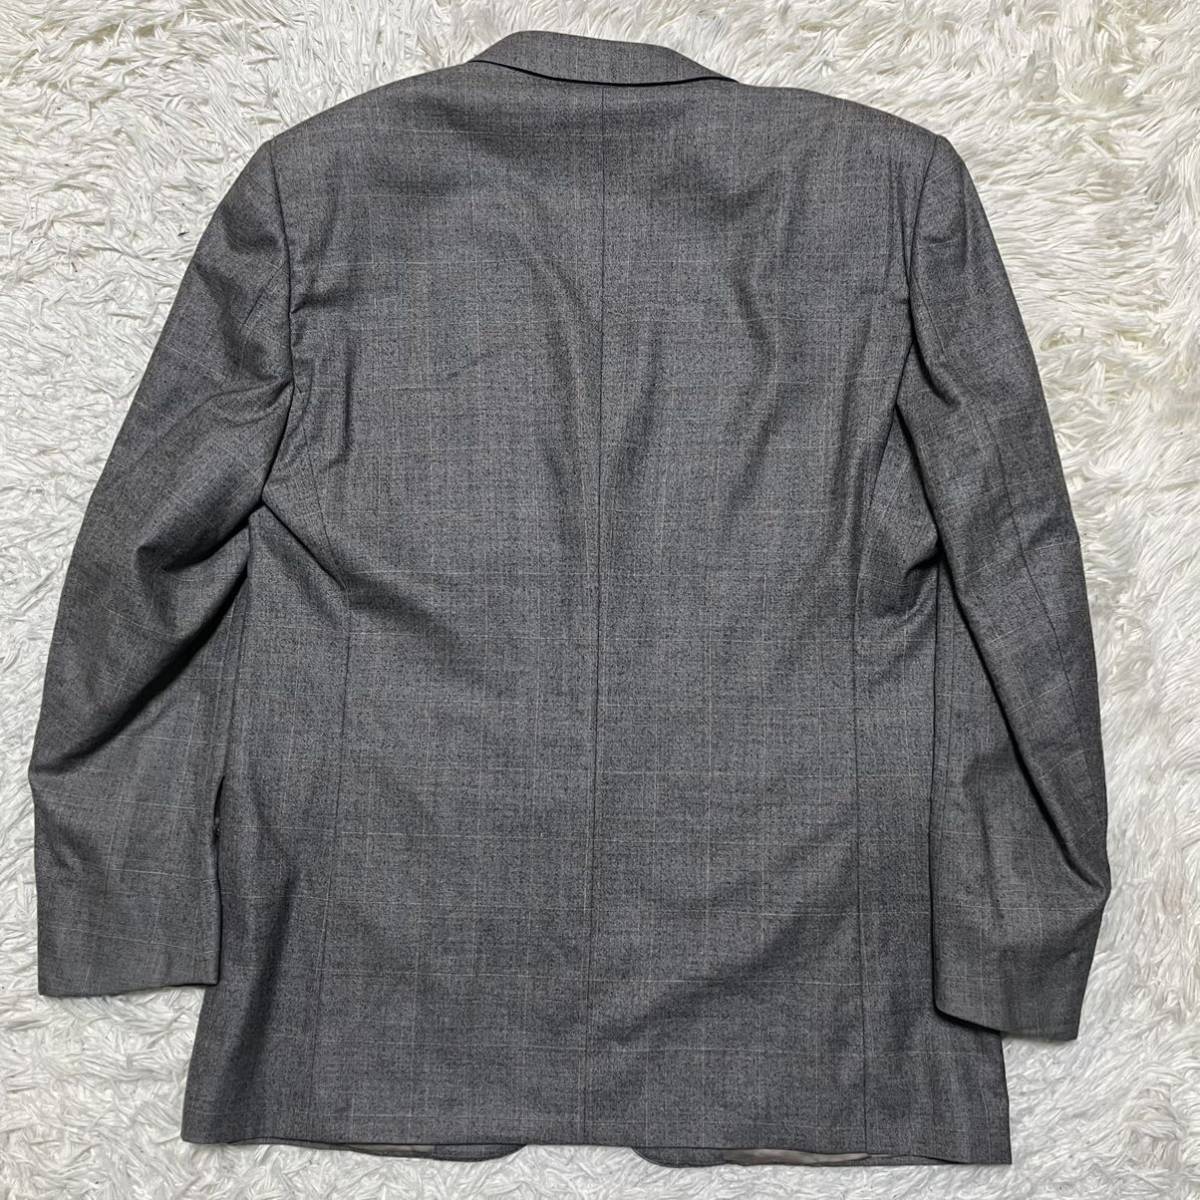 XL以上! エルメネジルドゼニア 『紳士の嗜み』 Zegna SU MISURA 15 MILMIL 15 スーツ テーラードジャケット 大きいサイズ 54 ブラウン_画像3